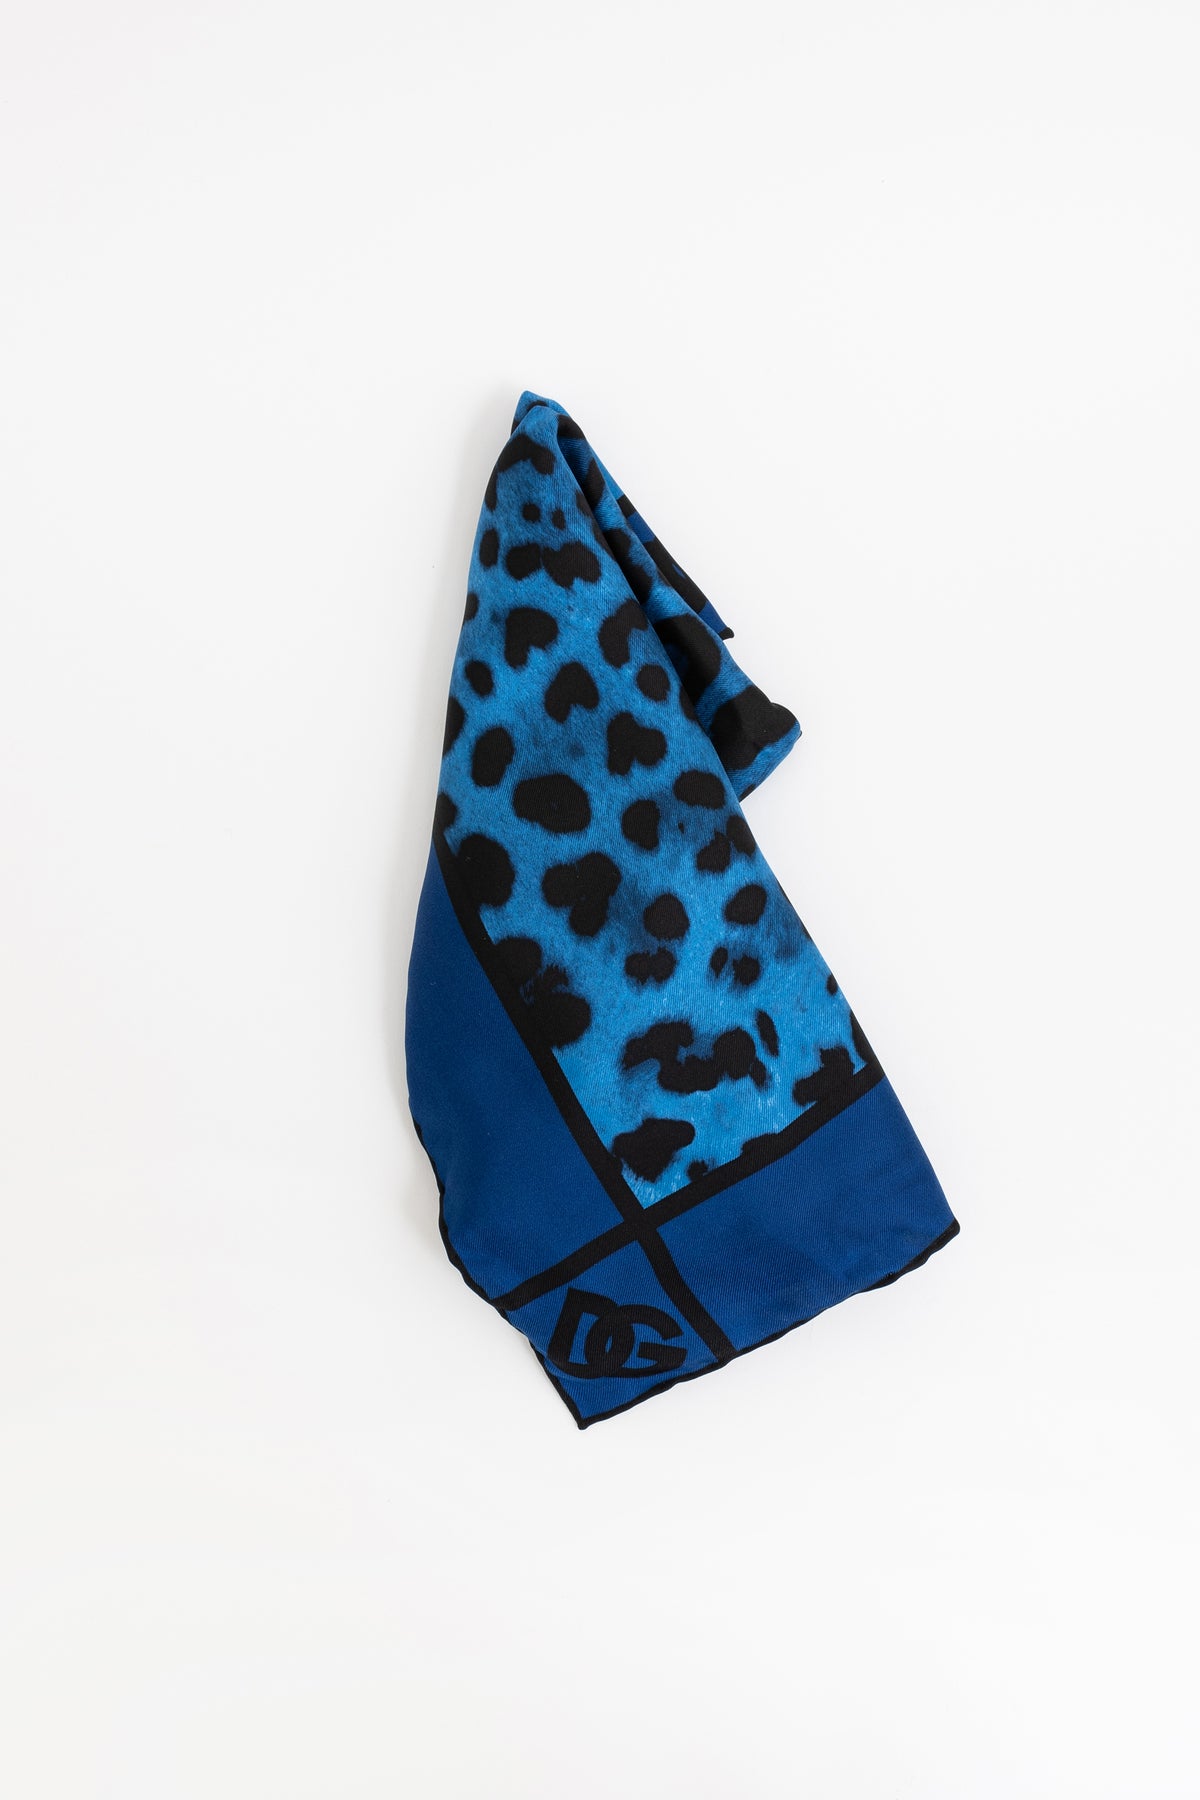 Dolce & Gabbana Blue and Black Leopard Print Silk Square Scarf